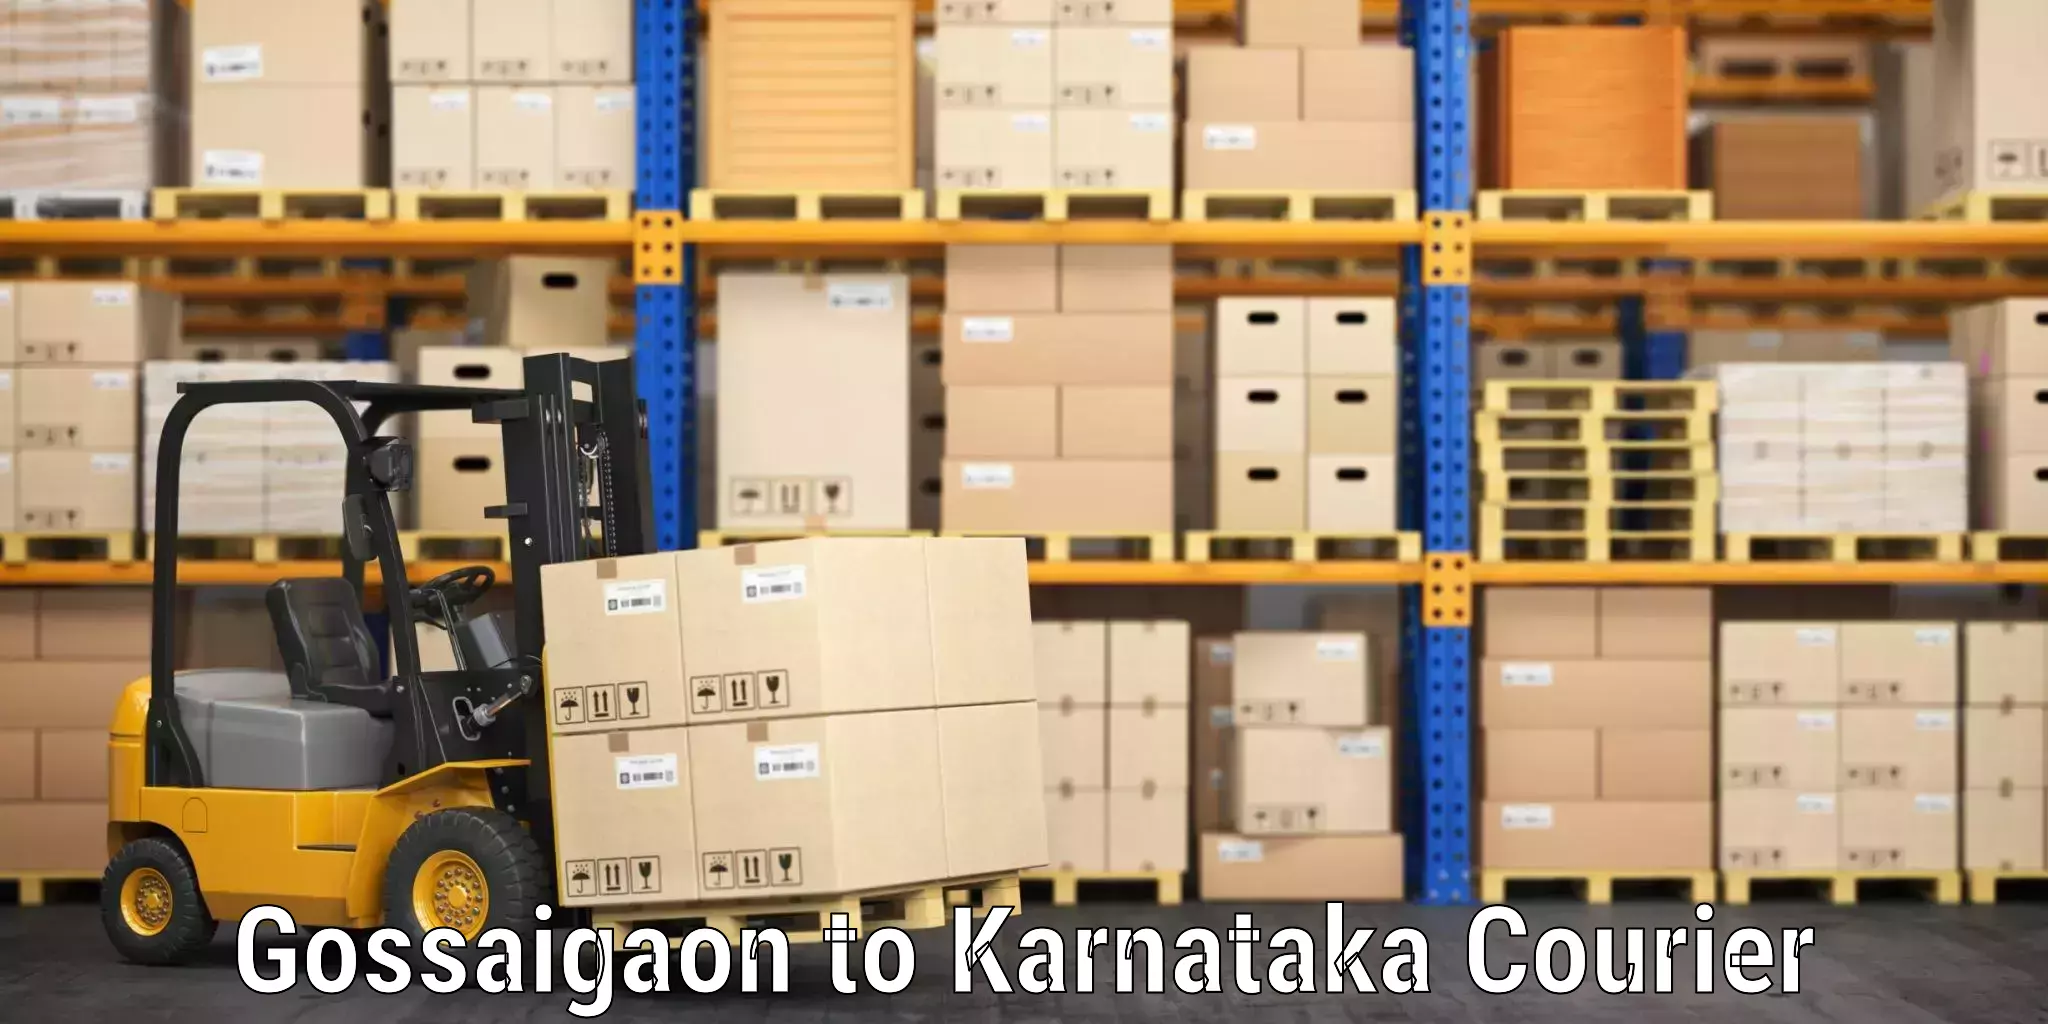 Baggage transport cost in Gossaigaon to Karnataka